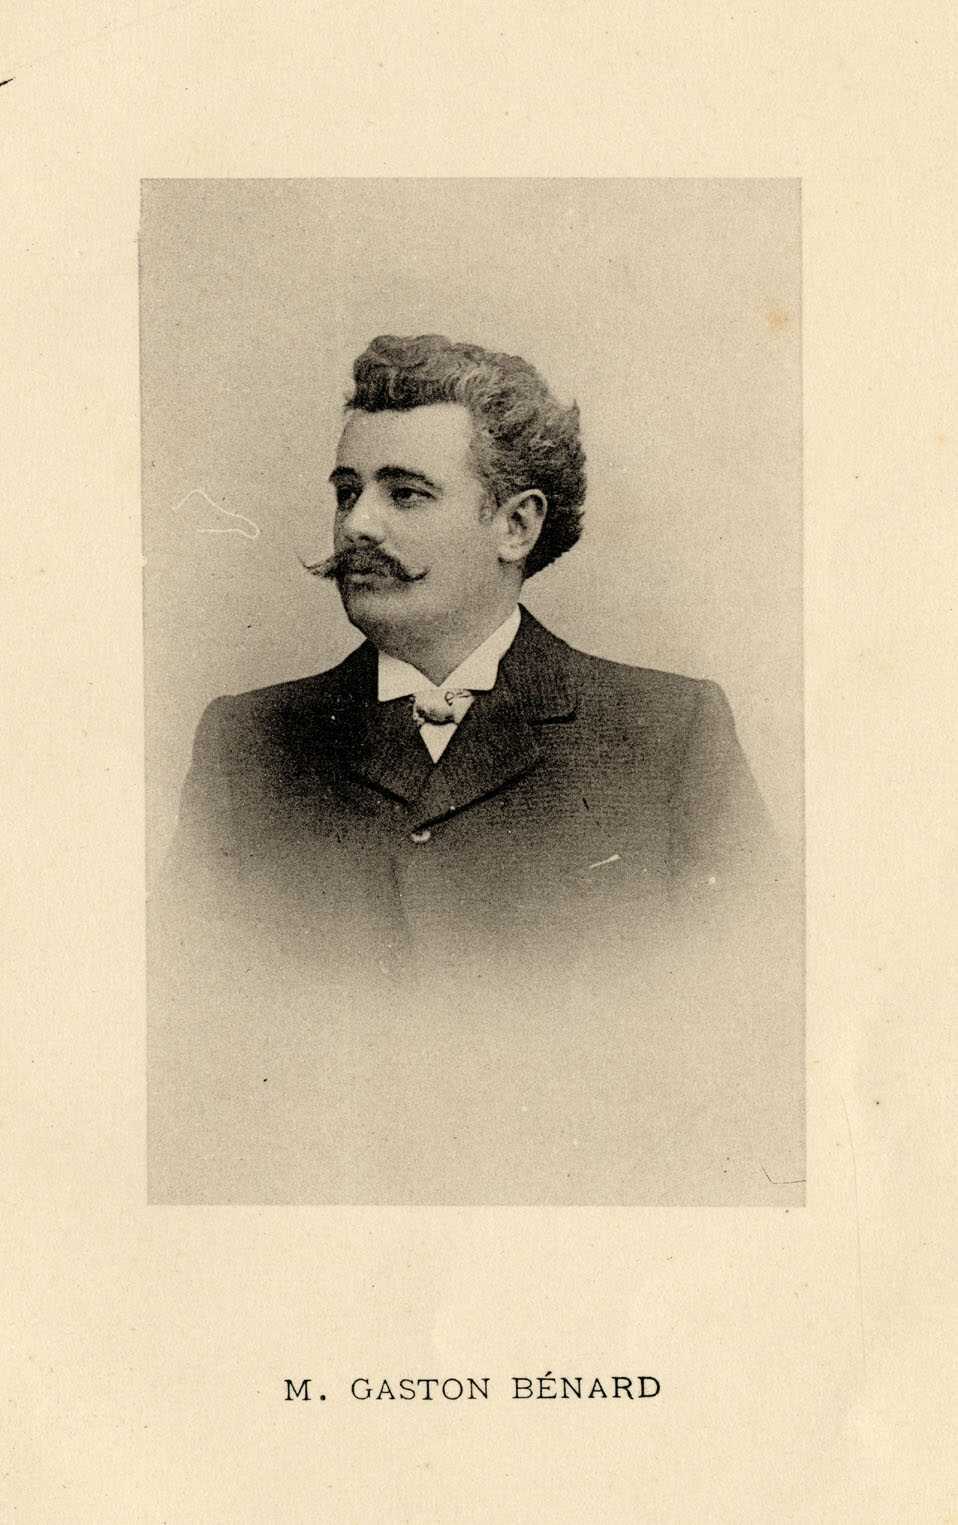 M. Gaston Bénard